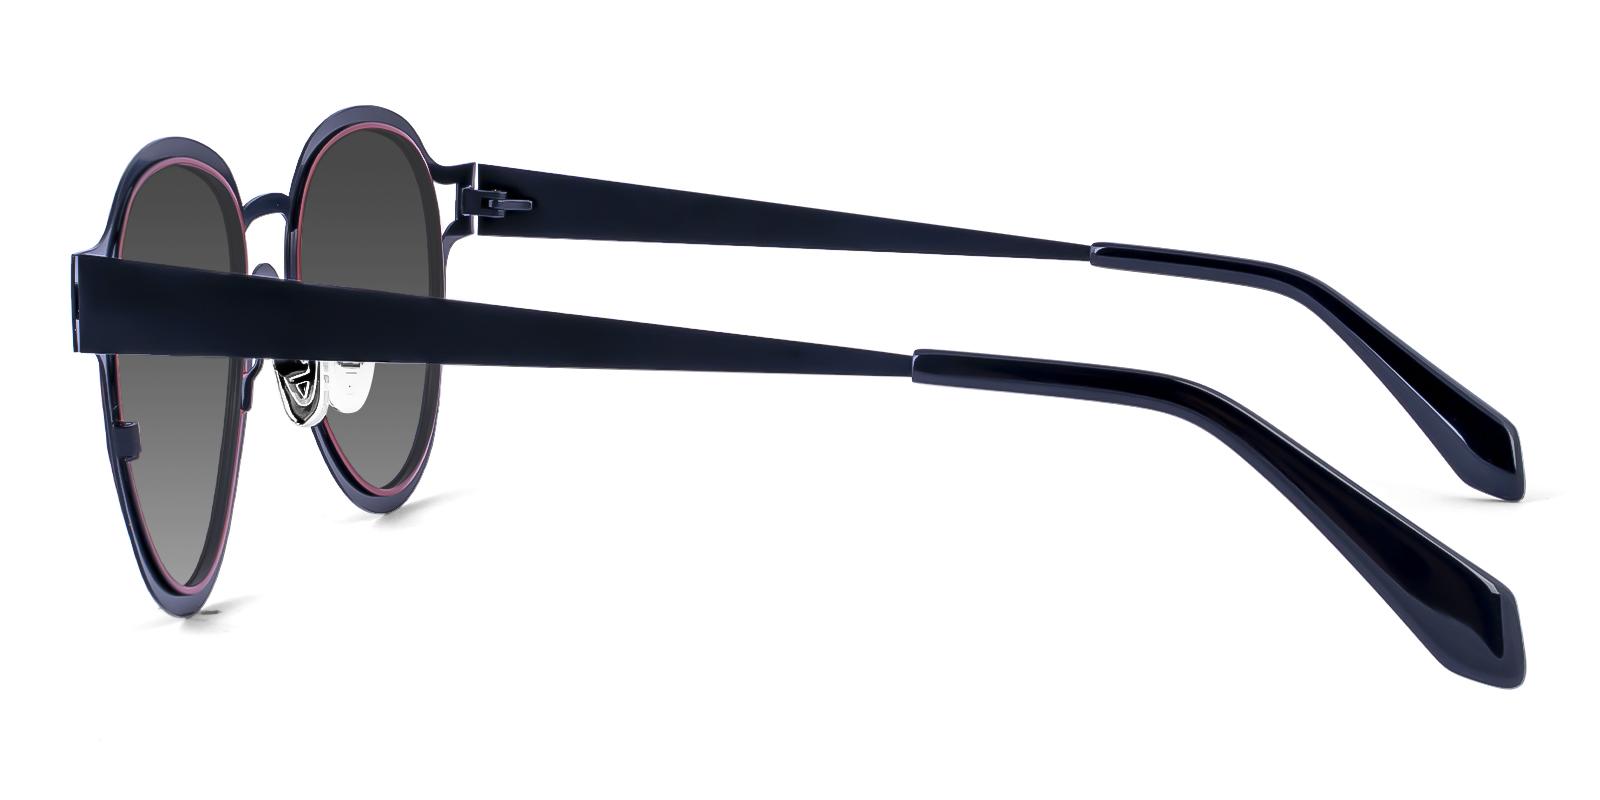 Phano Black Metal Sunglasses , NosePads Frames from ABBE Glasses